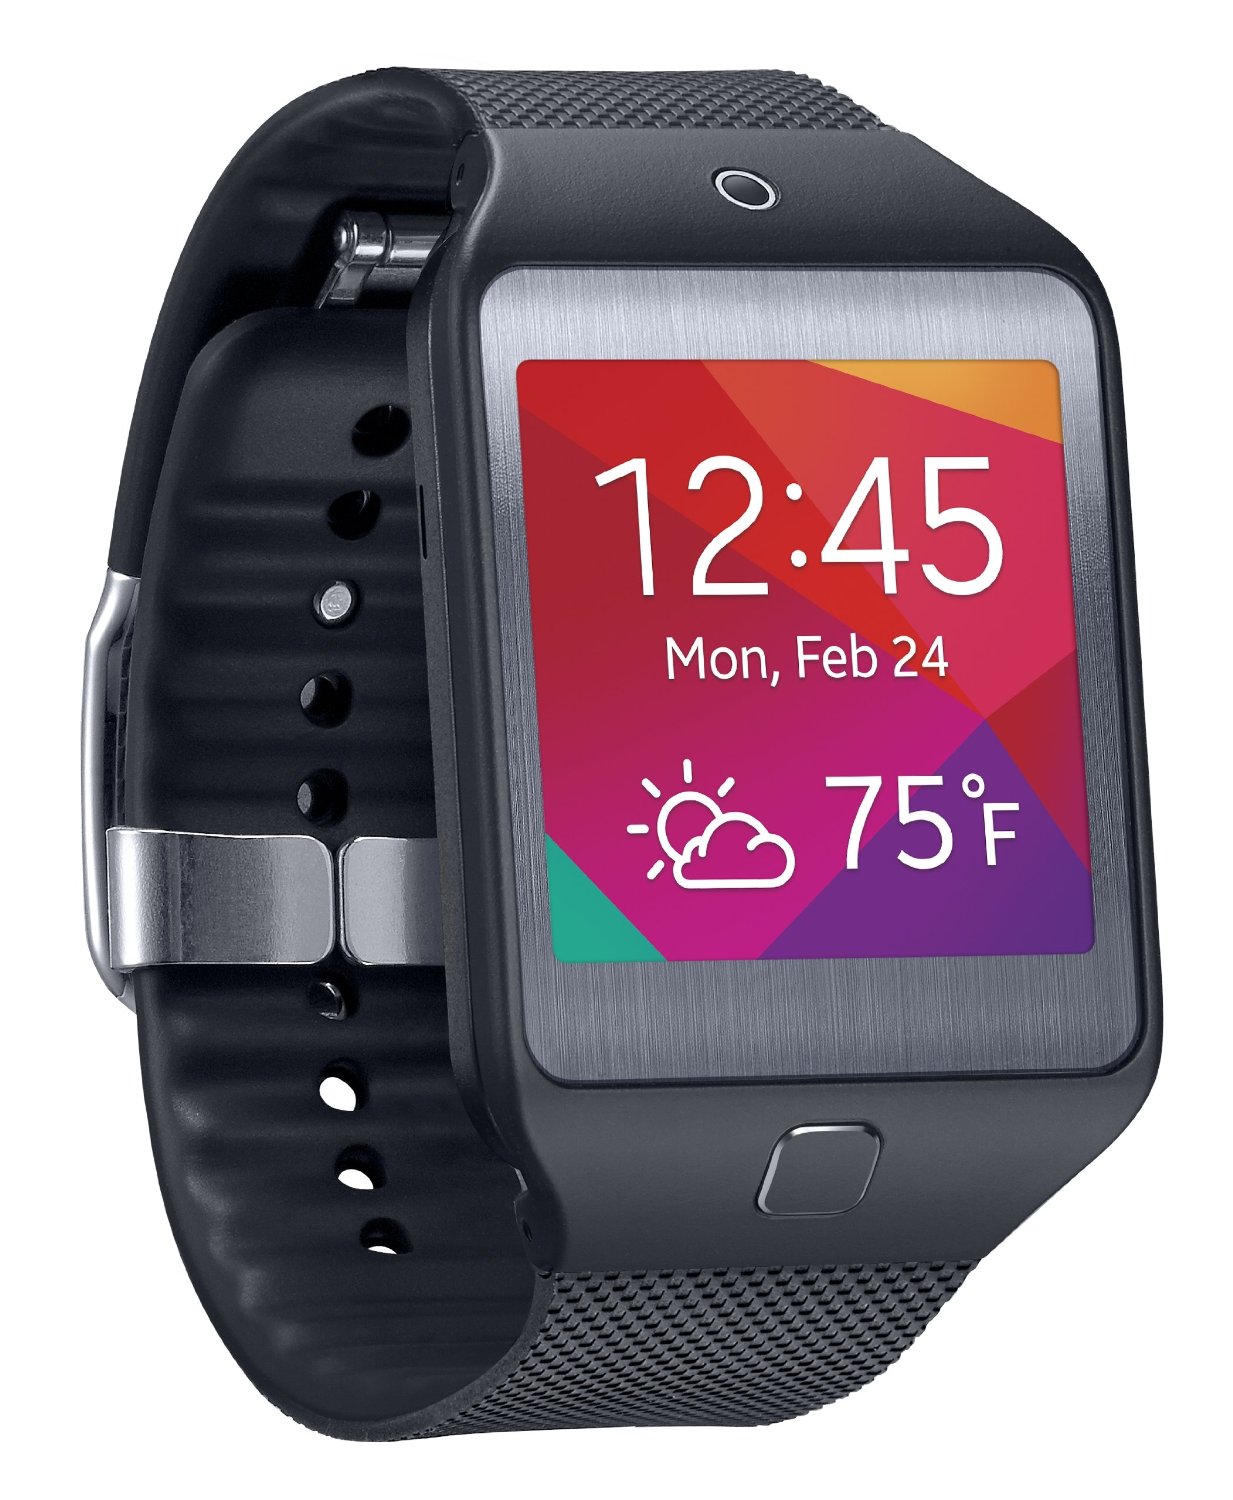 Samsung Gear 2 Neo Smartwatch Review